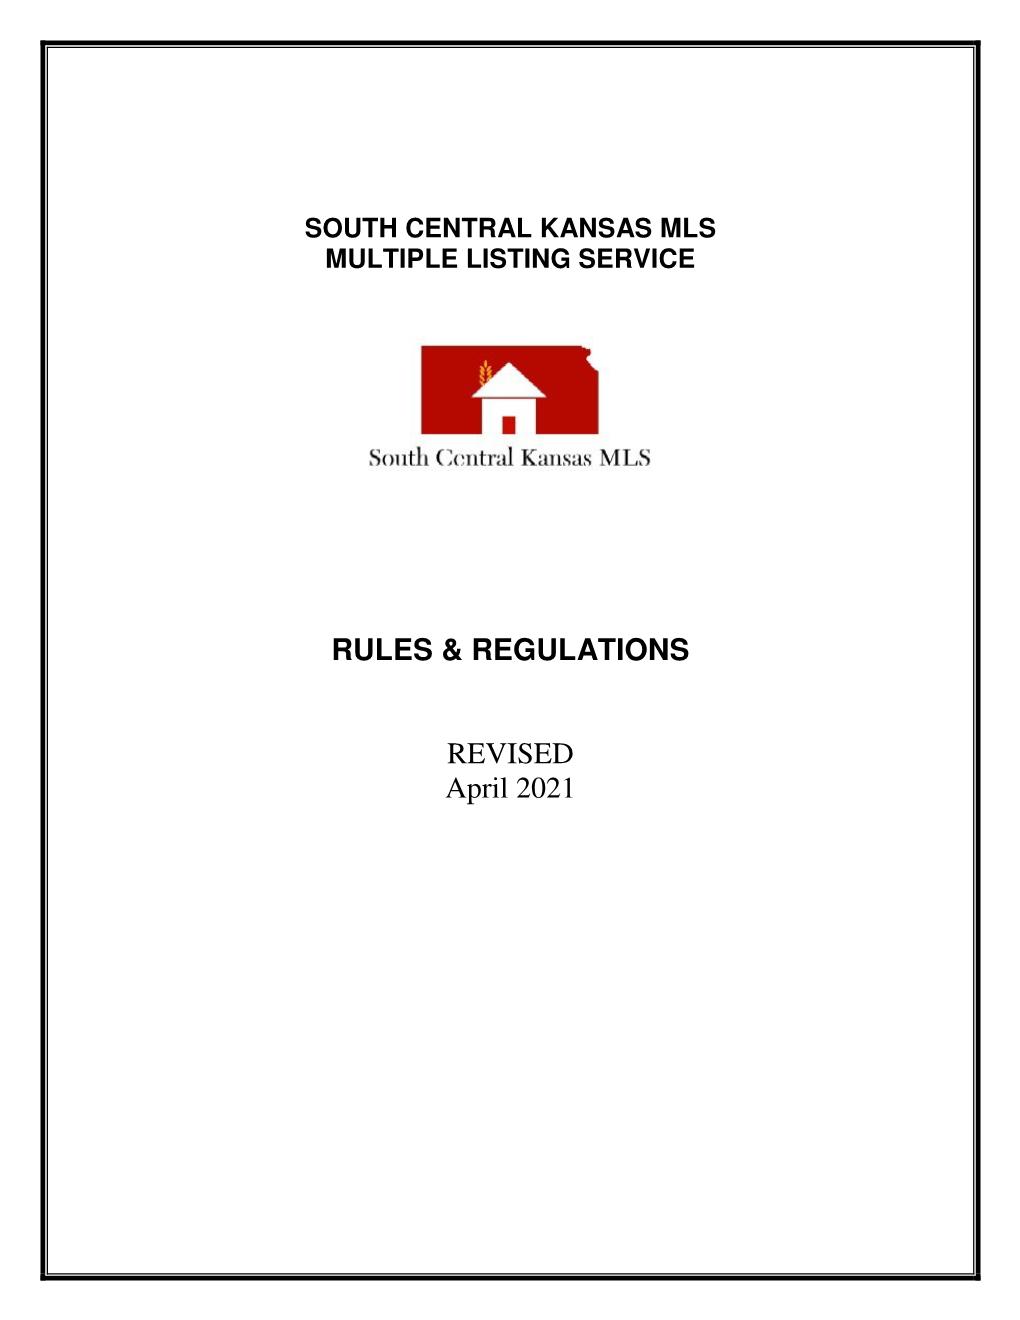 SCK MLS Rules & Regulations